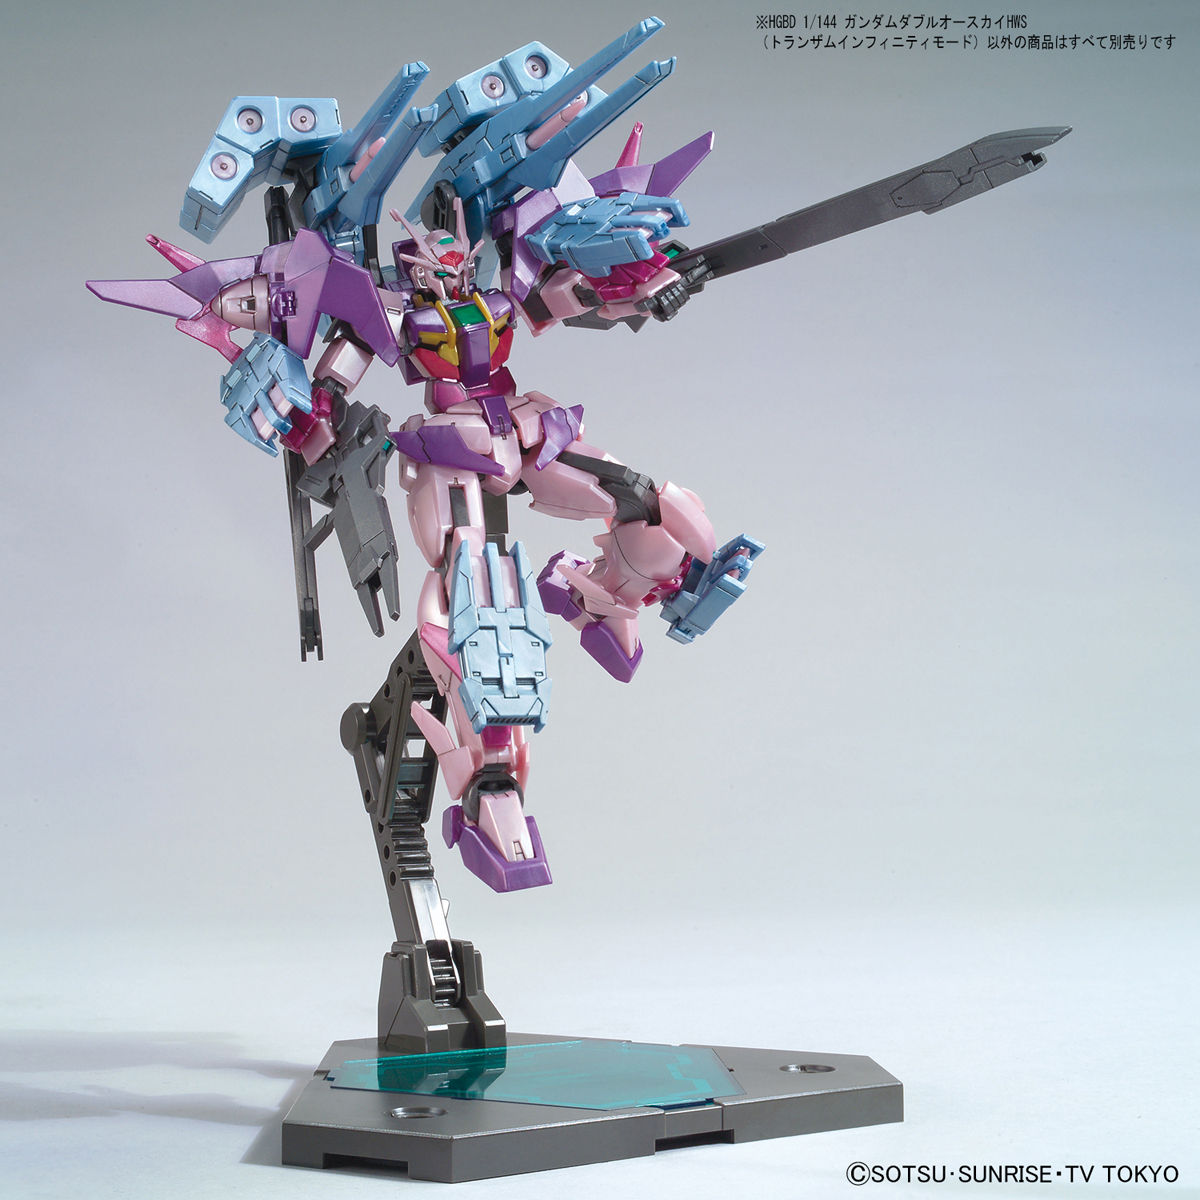 HGBD 1/144 No.21 GN-0000DVR/S/HWS Gundam 00 Sky Heavy Weapons System(Trans-AM Infinity Mode)